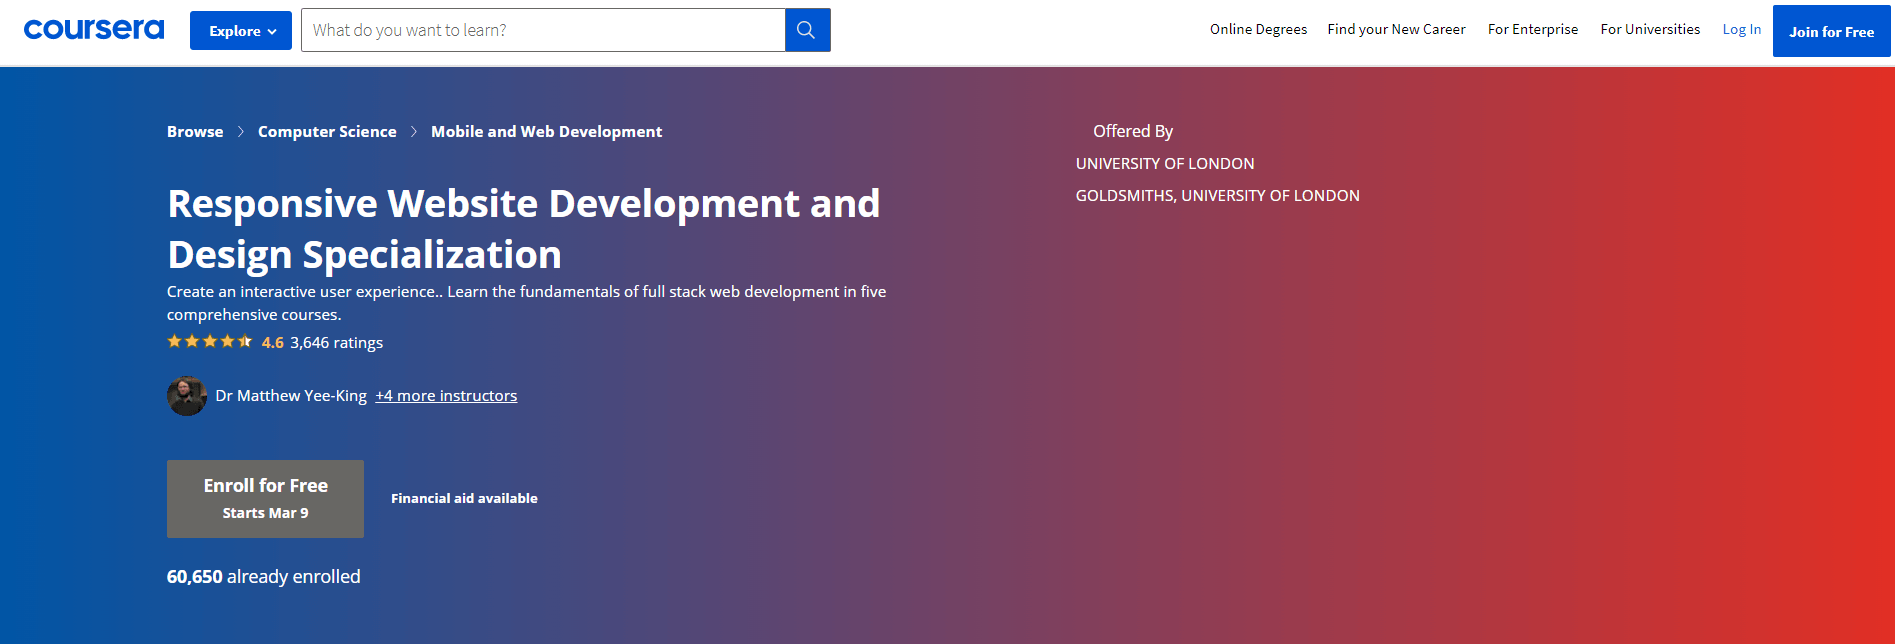 Best Coursera Web Development Courses